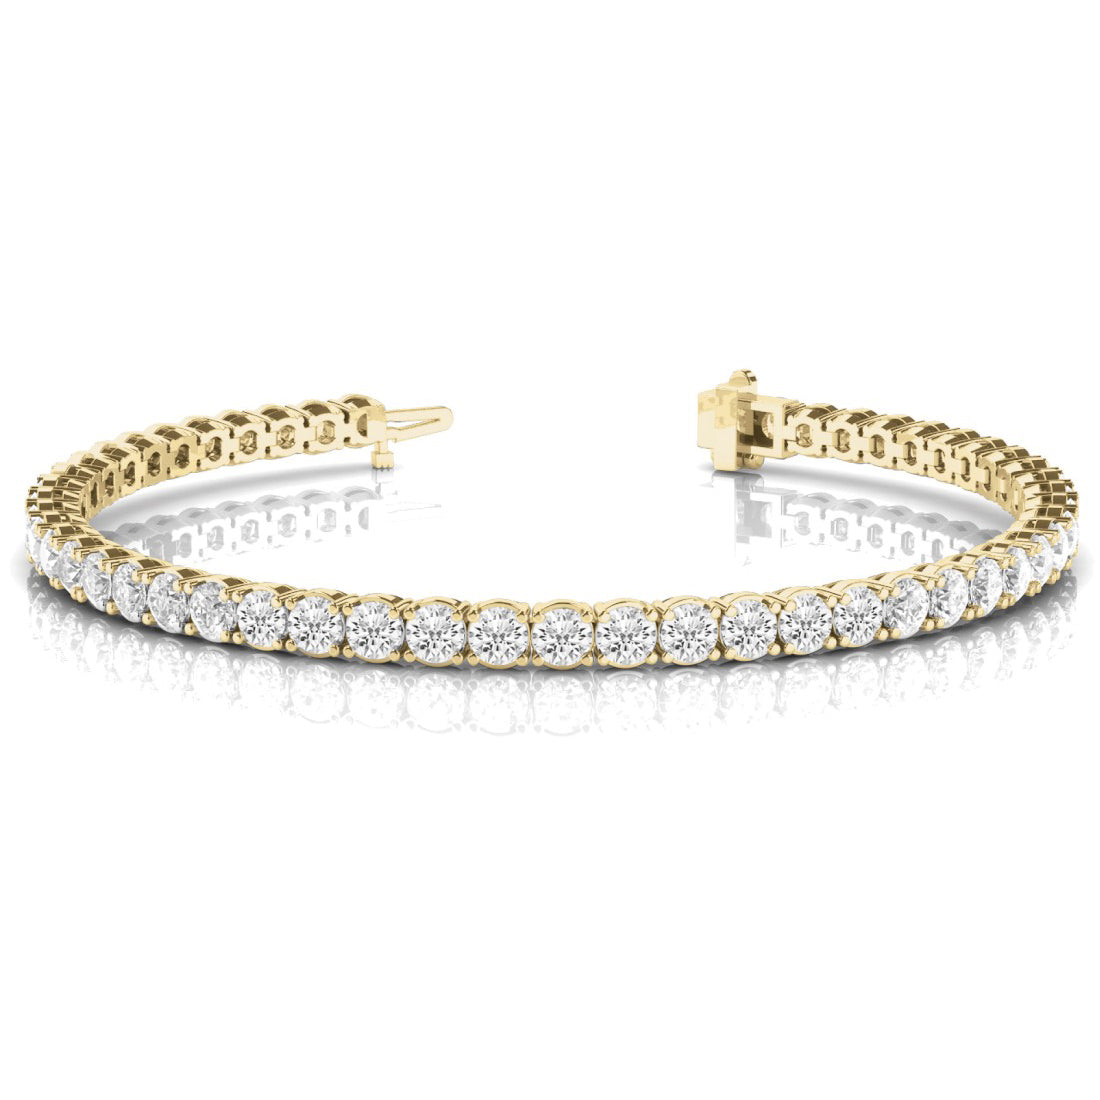 Shop online - 24 carat gold| Kalyan Jewellers